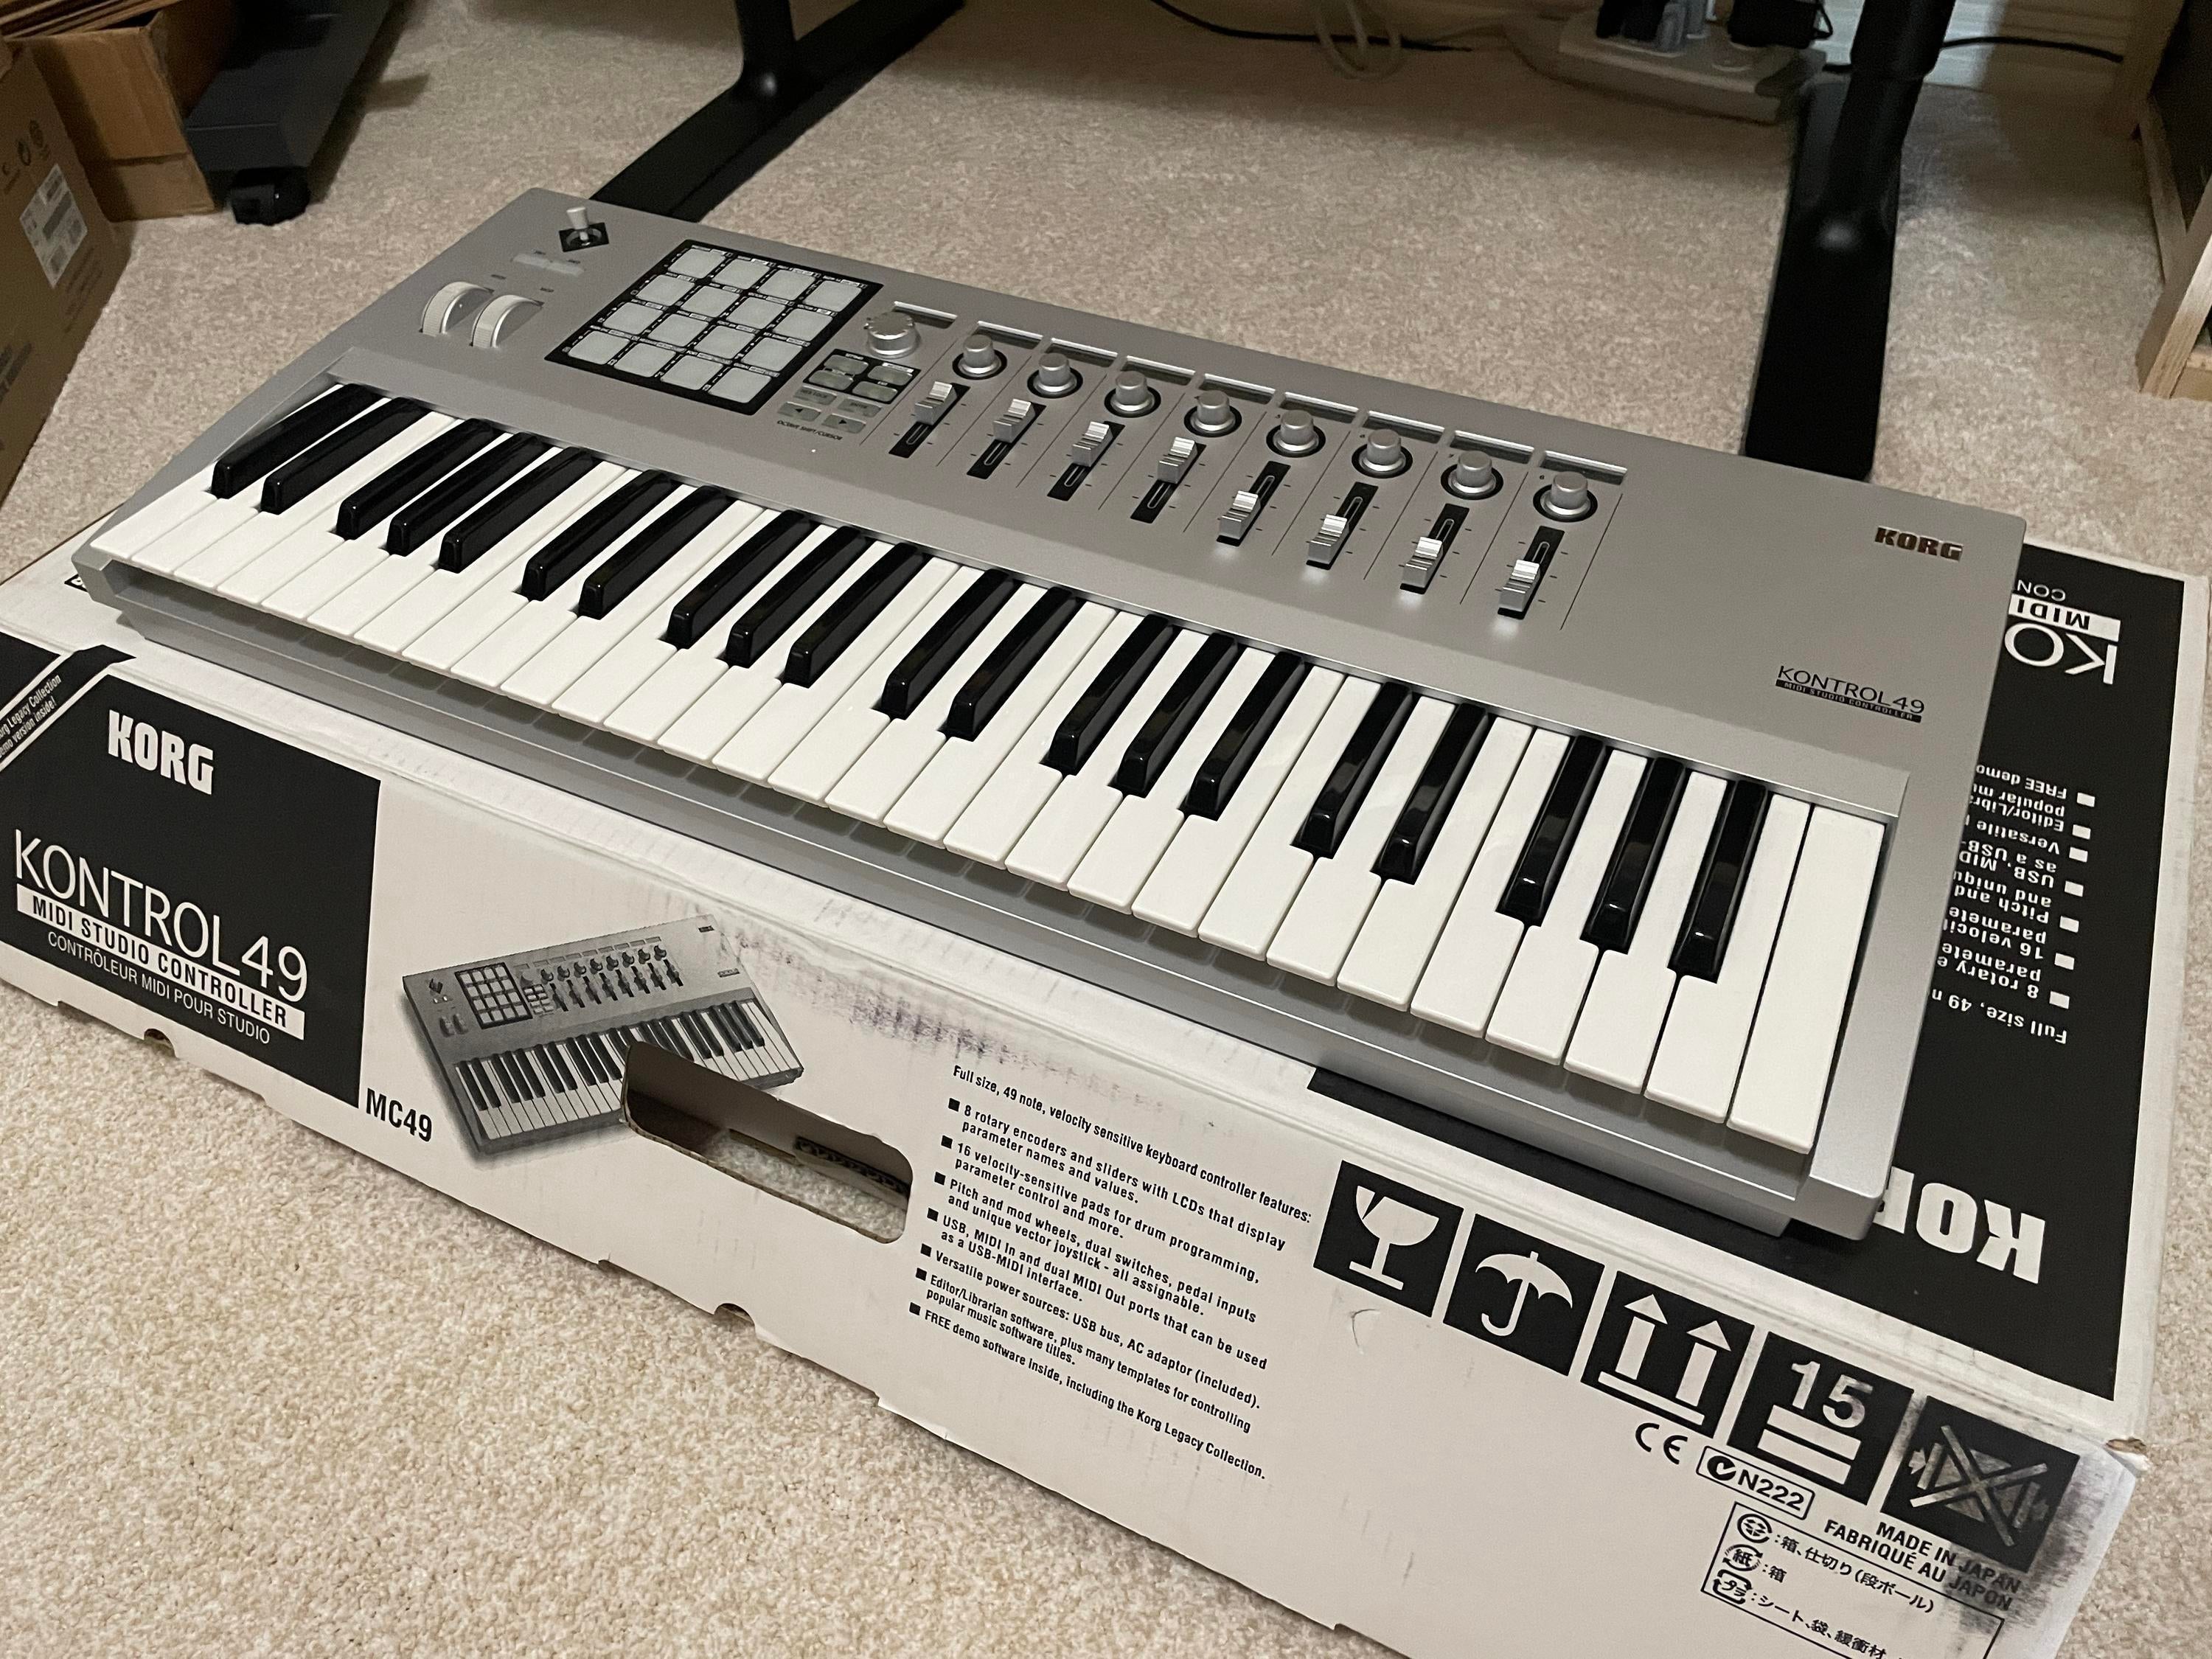 Used Korg Kontrol 49, MIDI keyboard and - Sweetwater's Gear Exchange